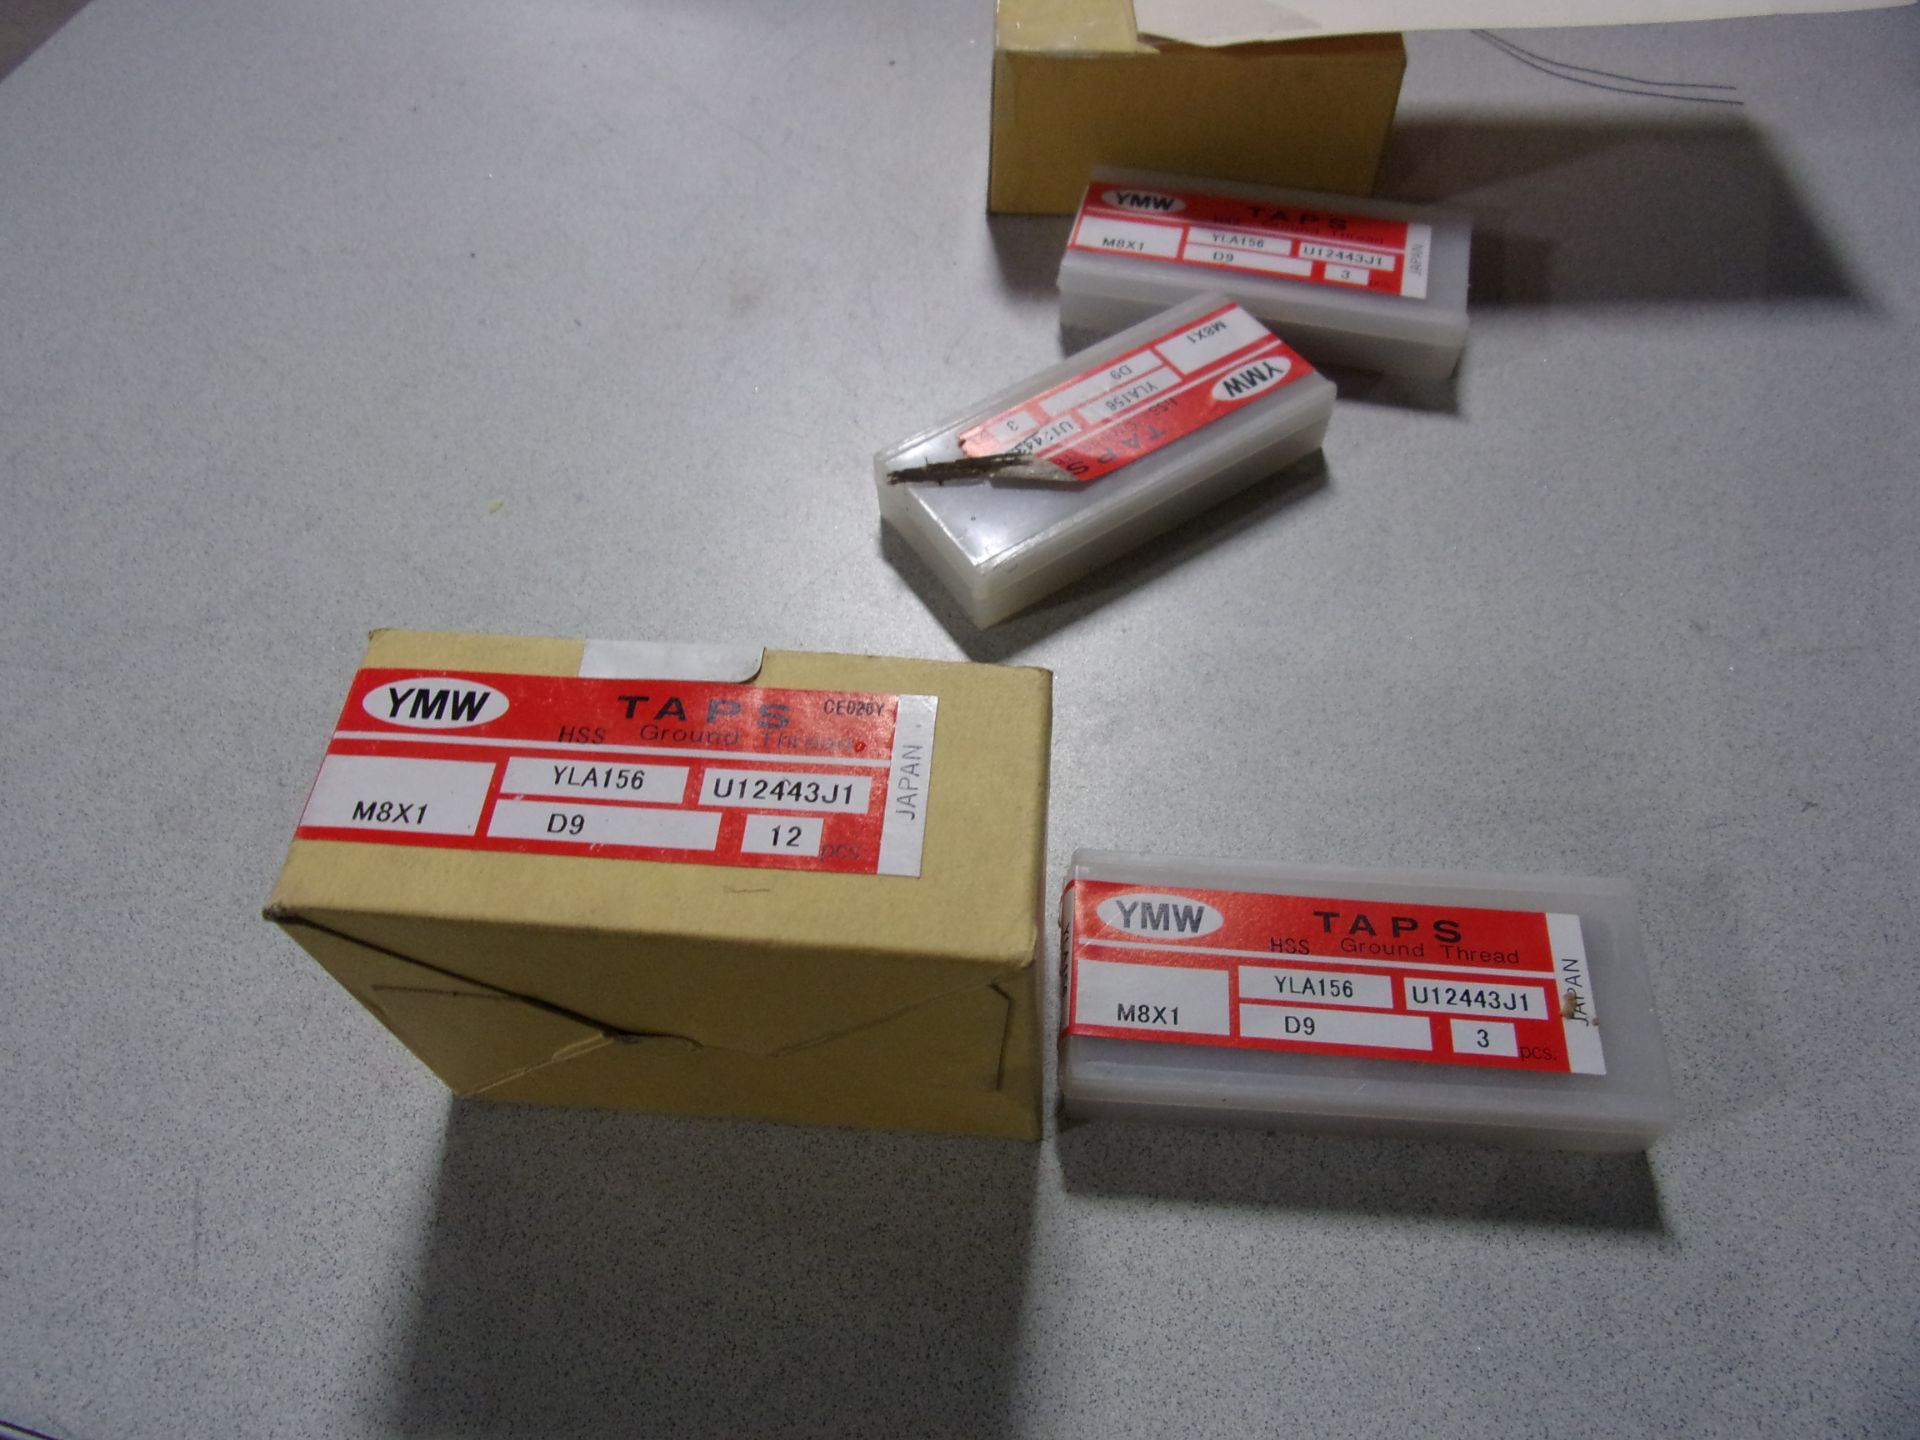 5 BOXES TOTAL OF 30 NEW TAPS M8 X1 - Bild 2 aus 2